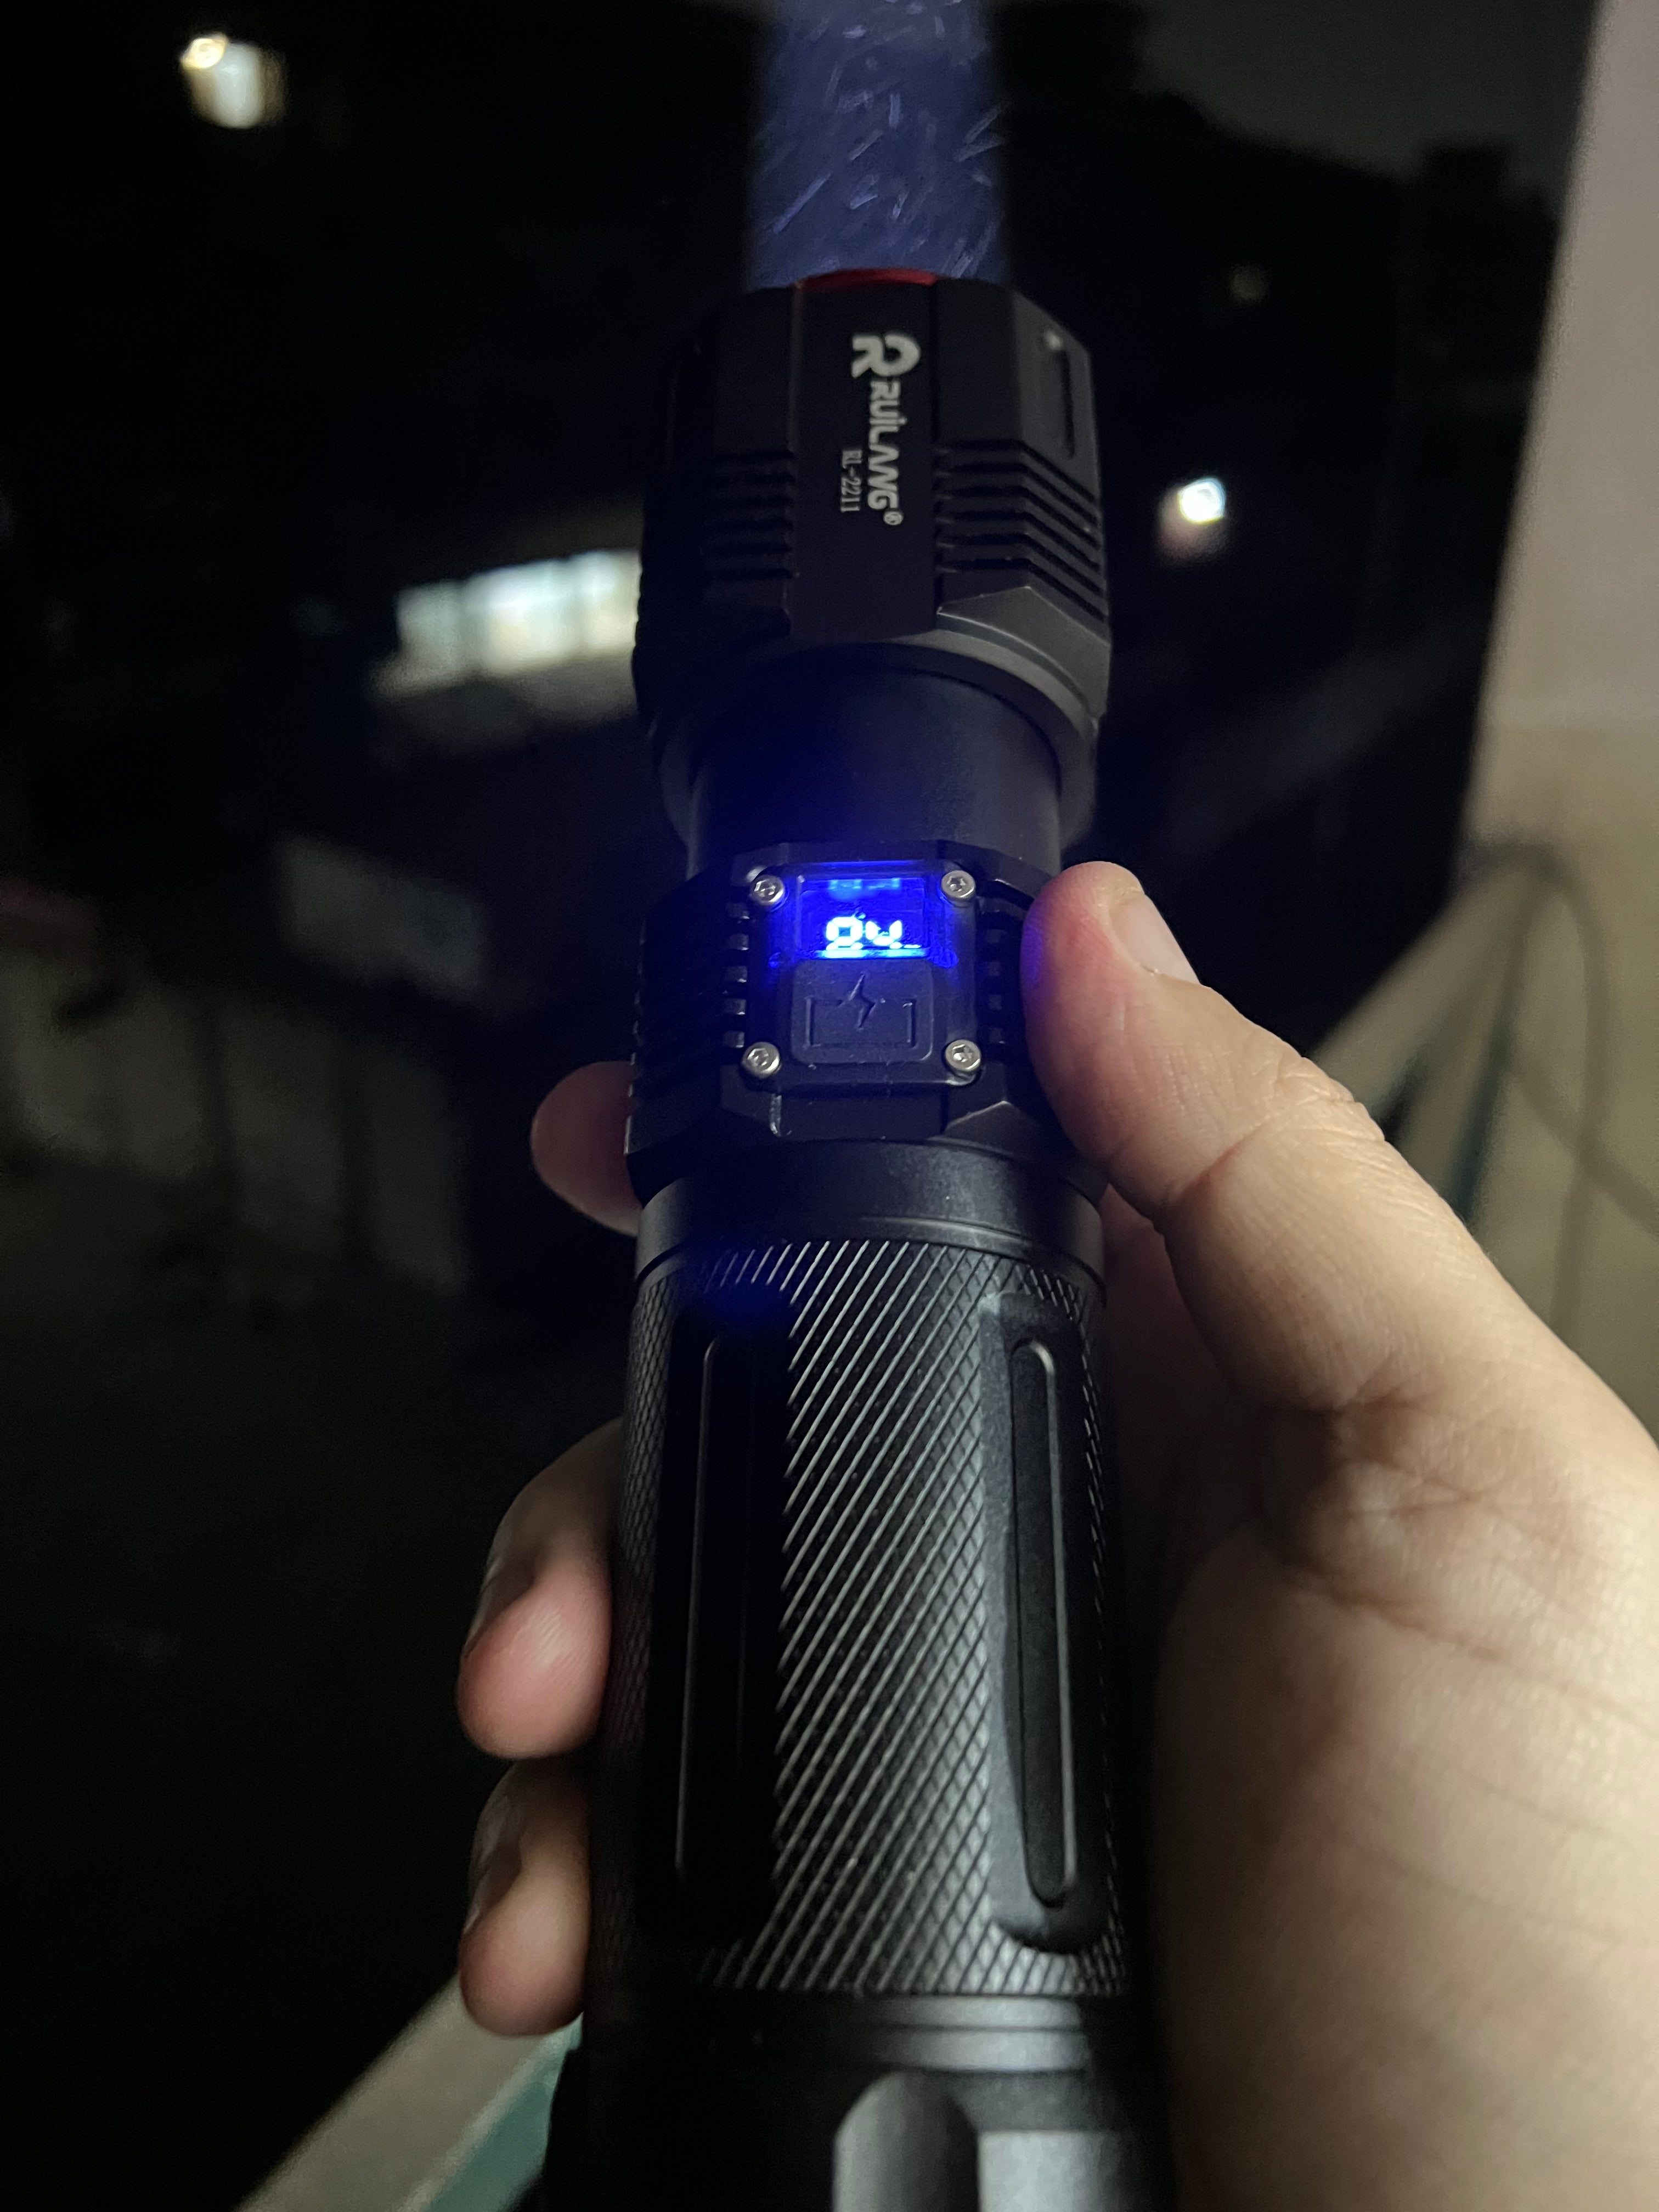 Lot imported digital flash light (torch )